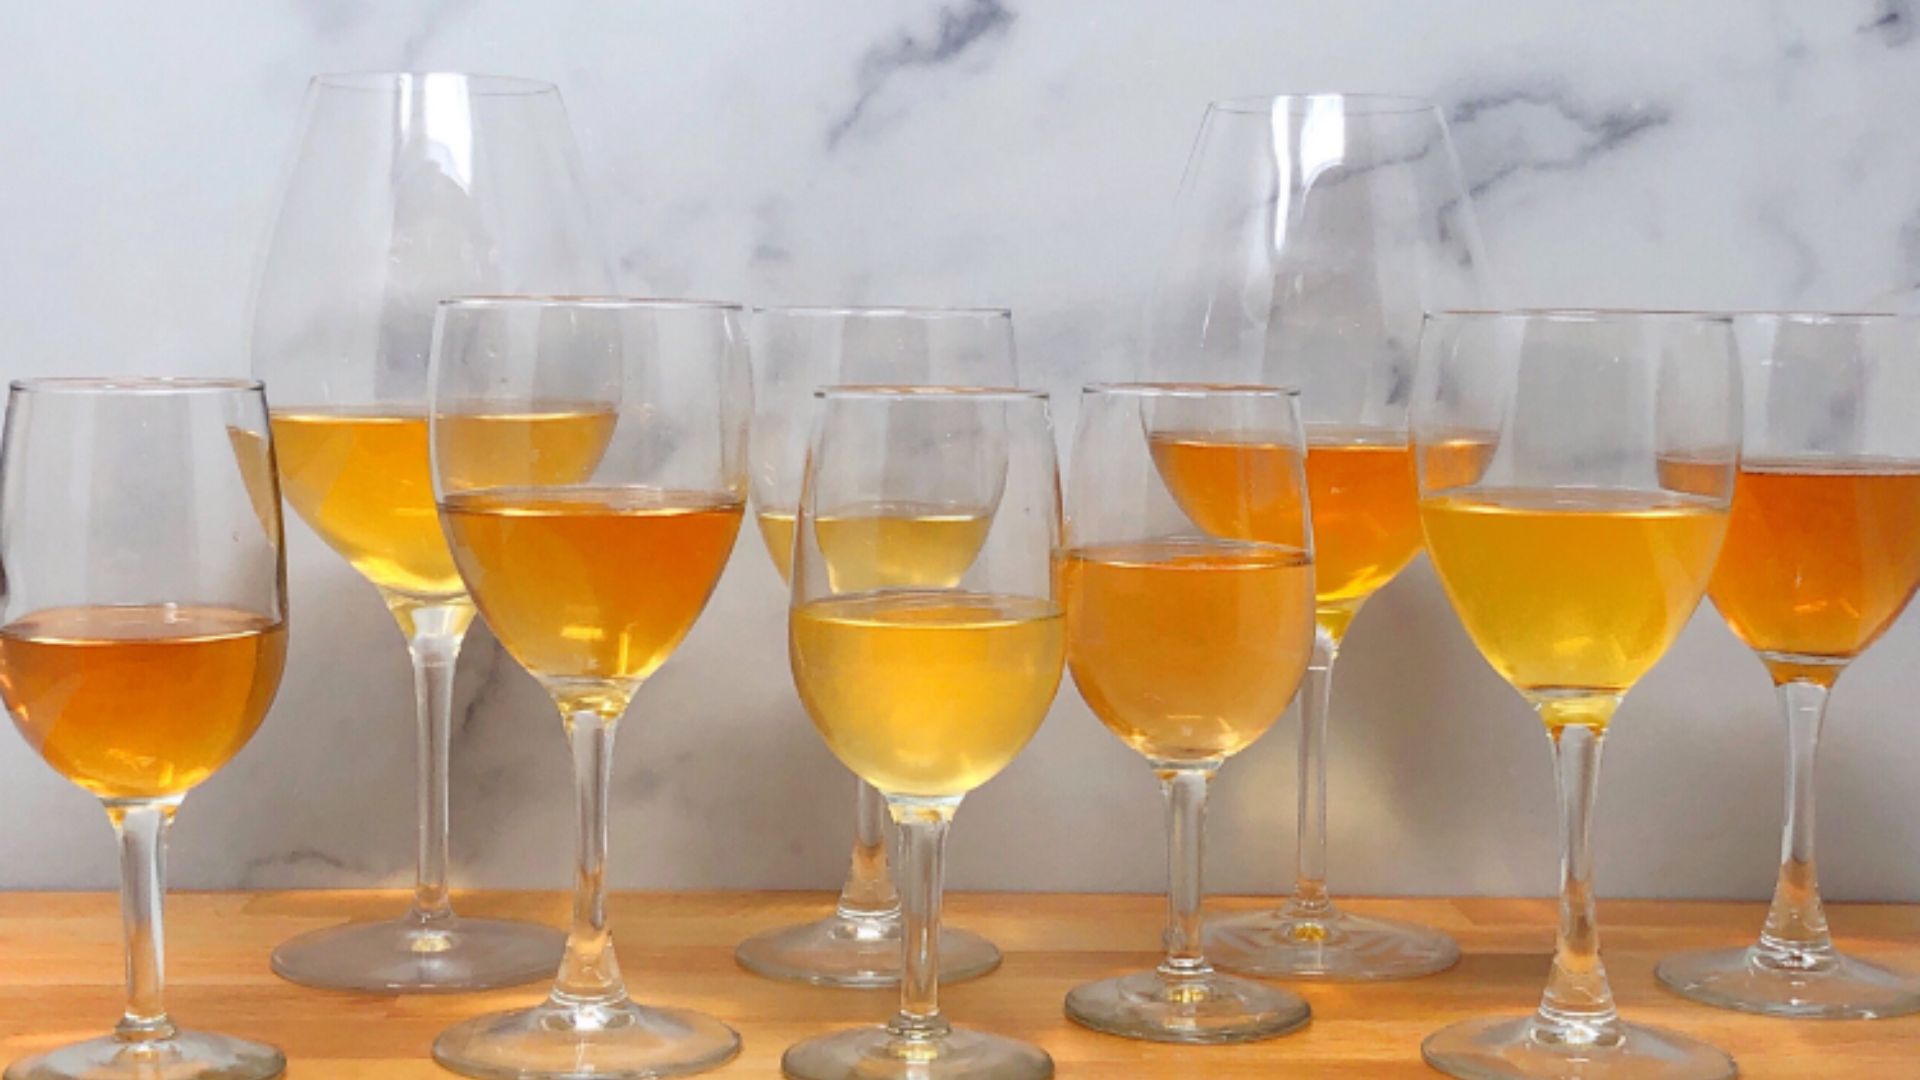 wine glasses with amber wine